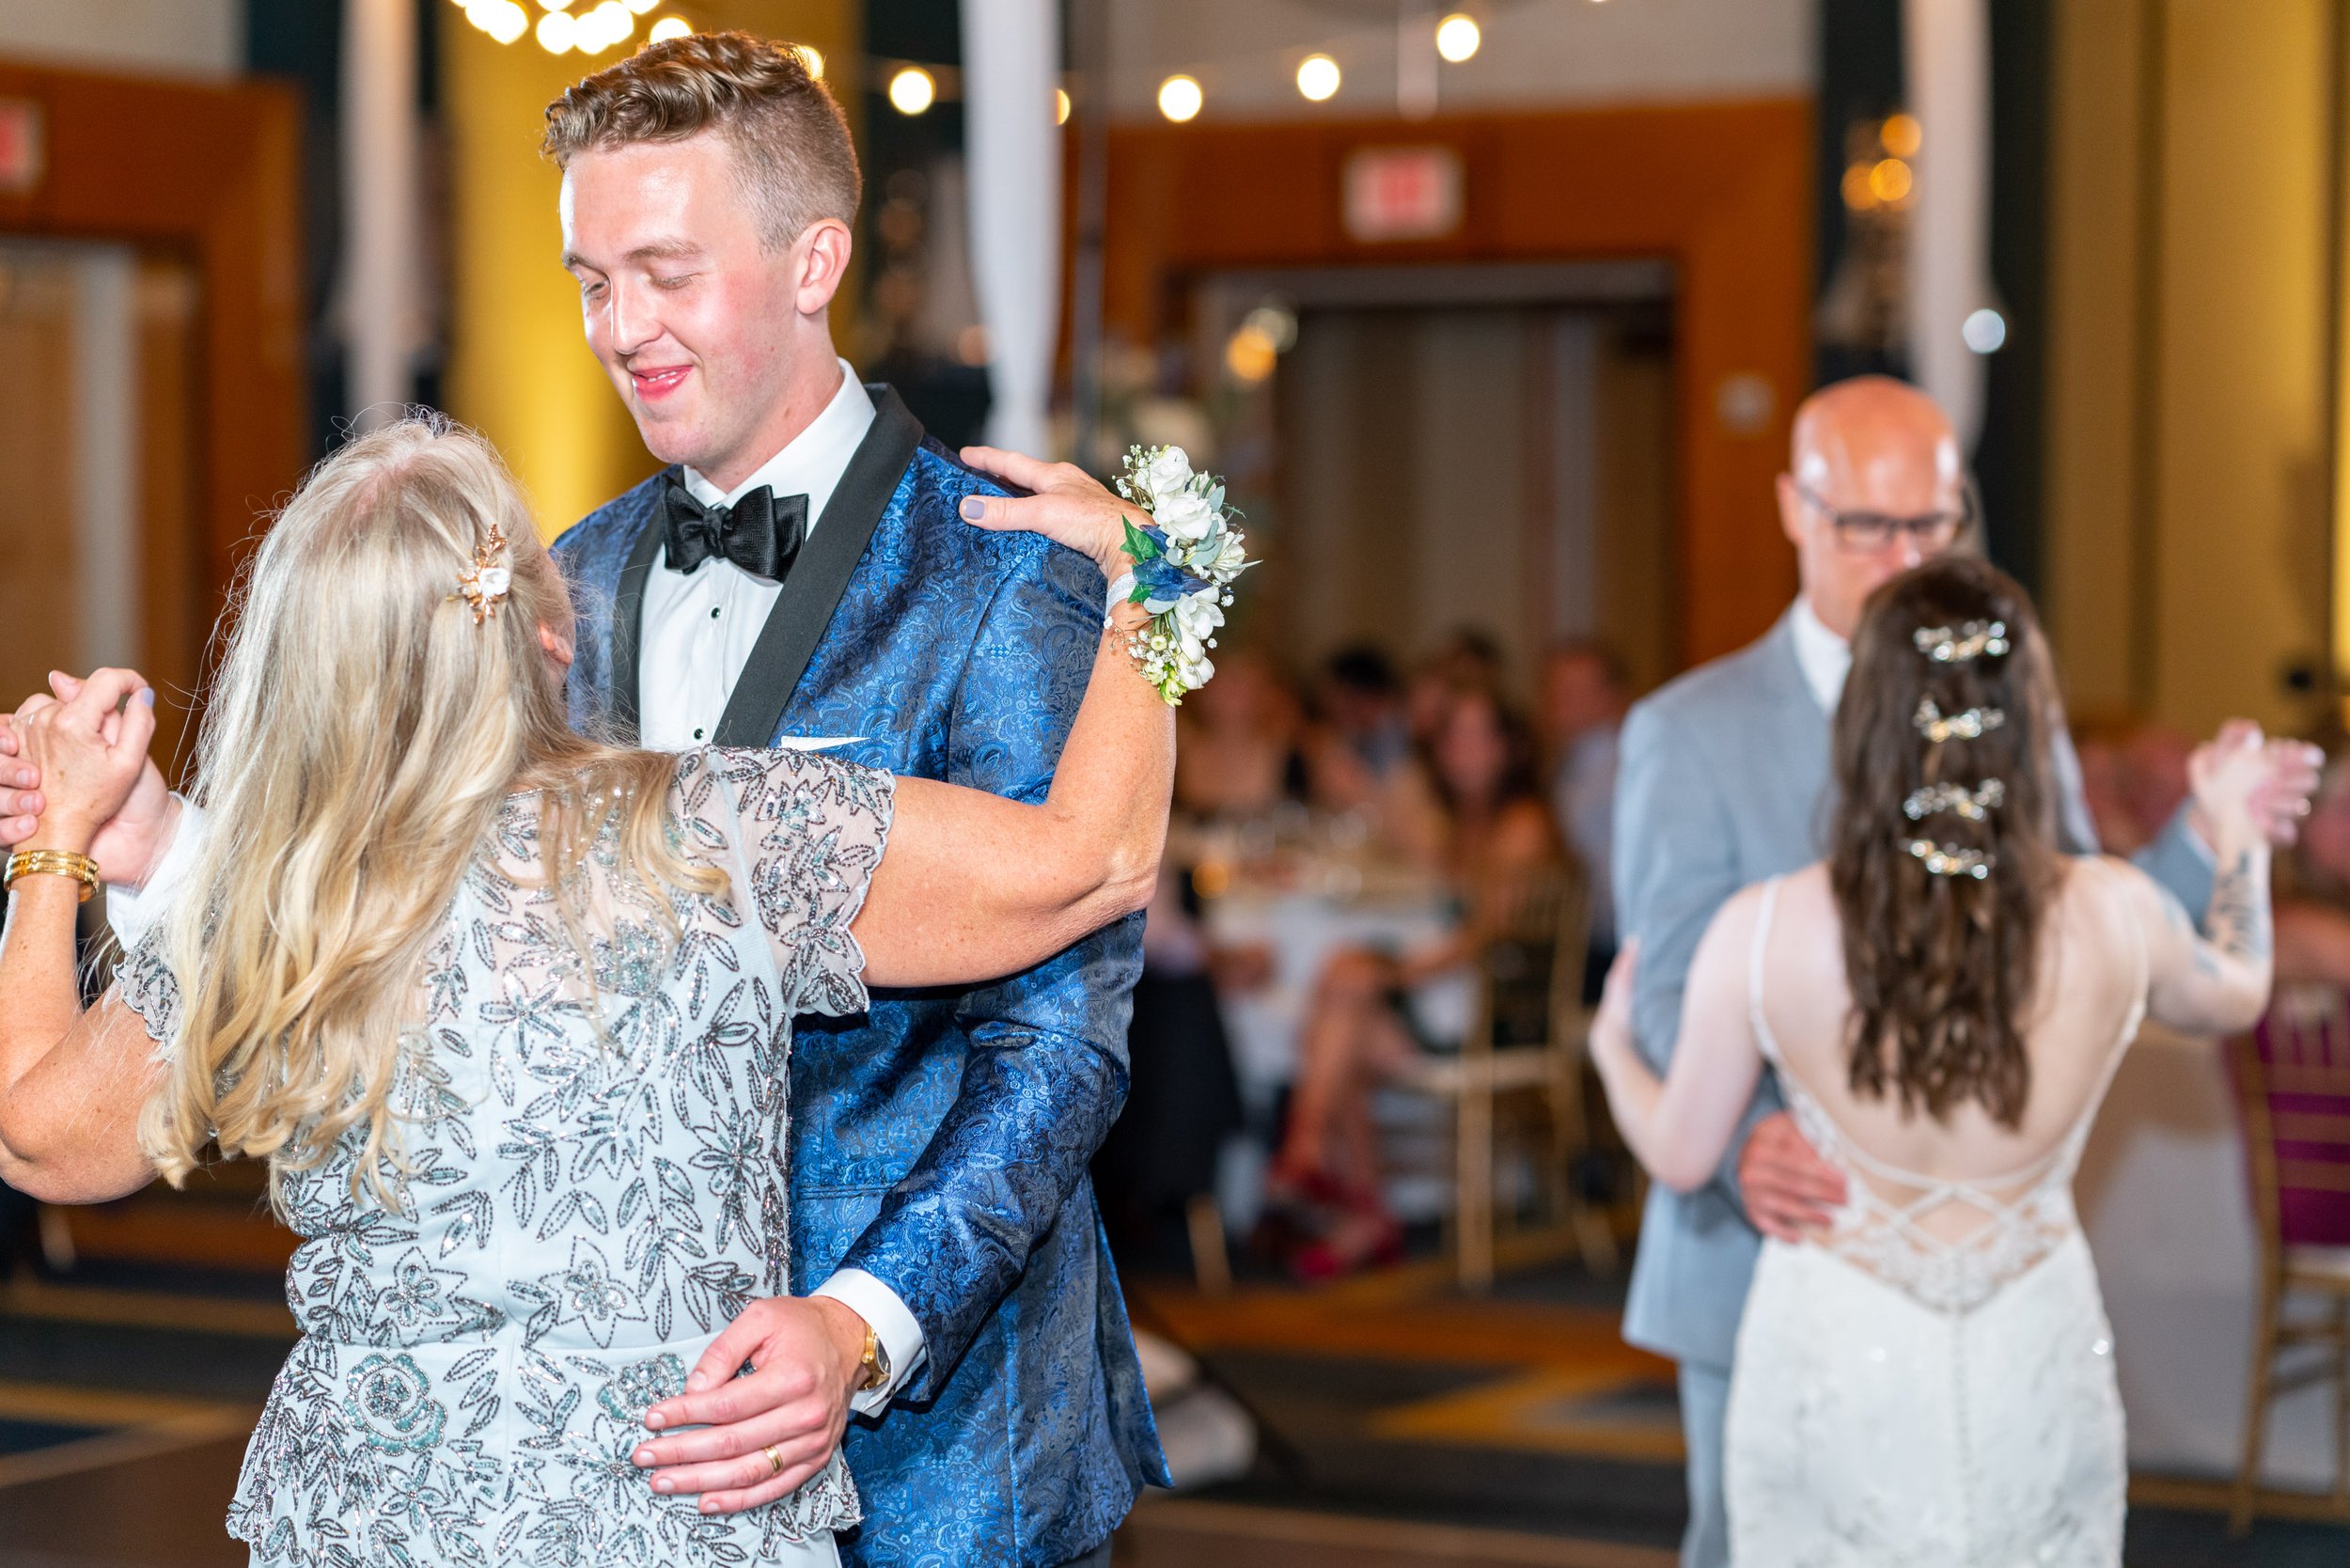 Mother son dance with groom at wedding at Hyatt Regency Chesapeake maryland